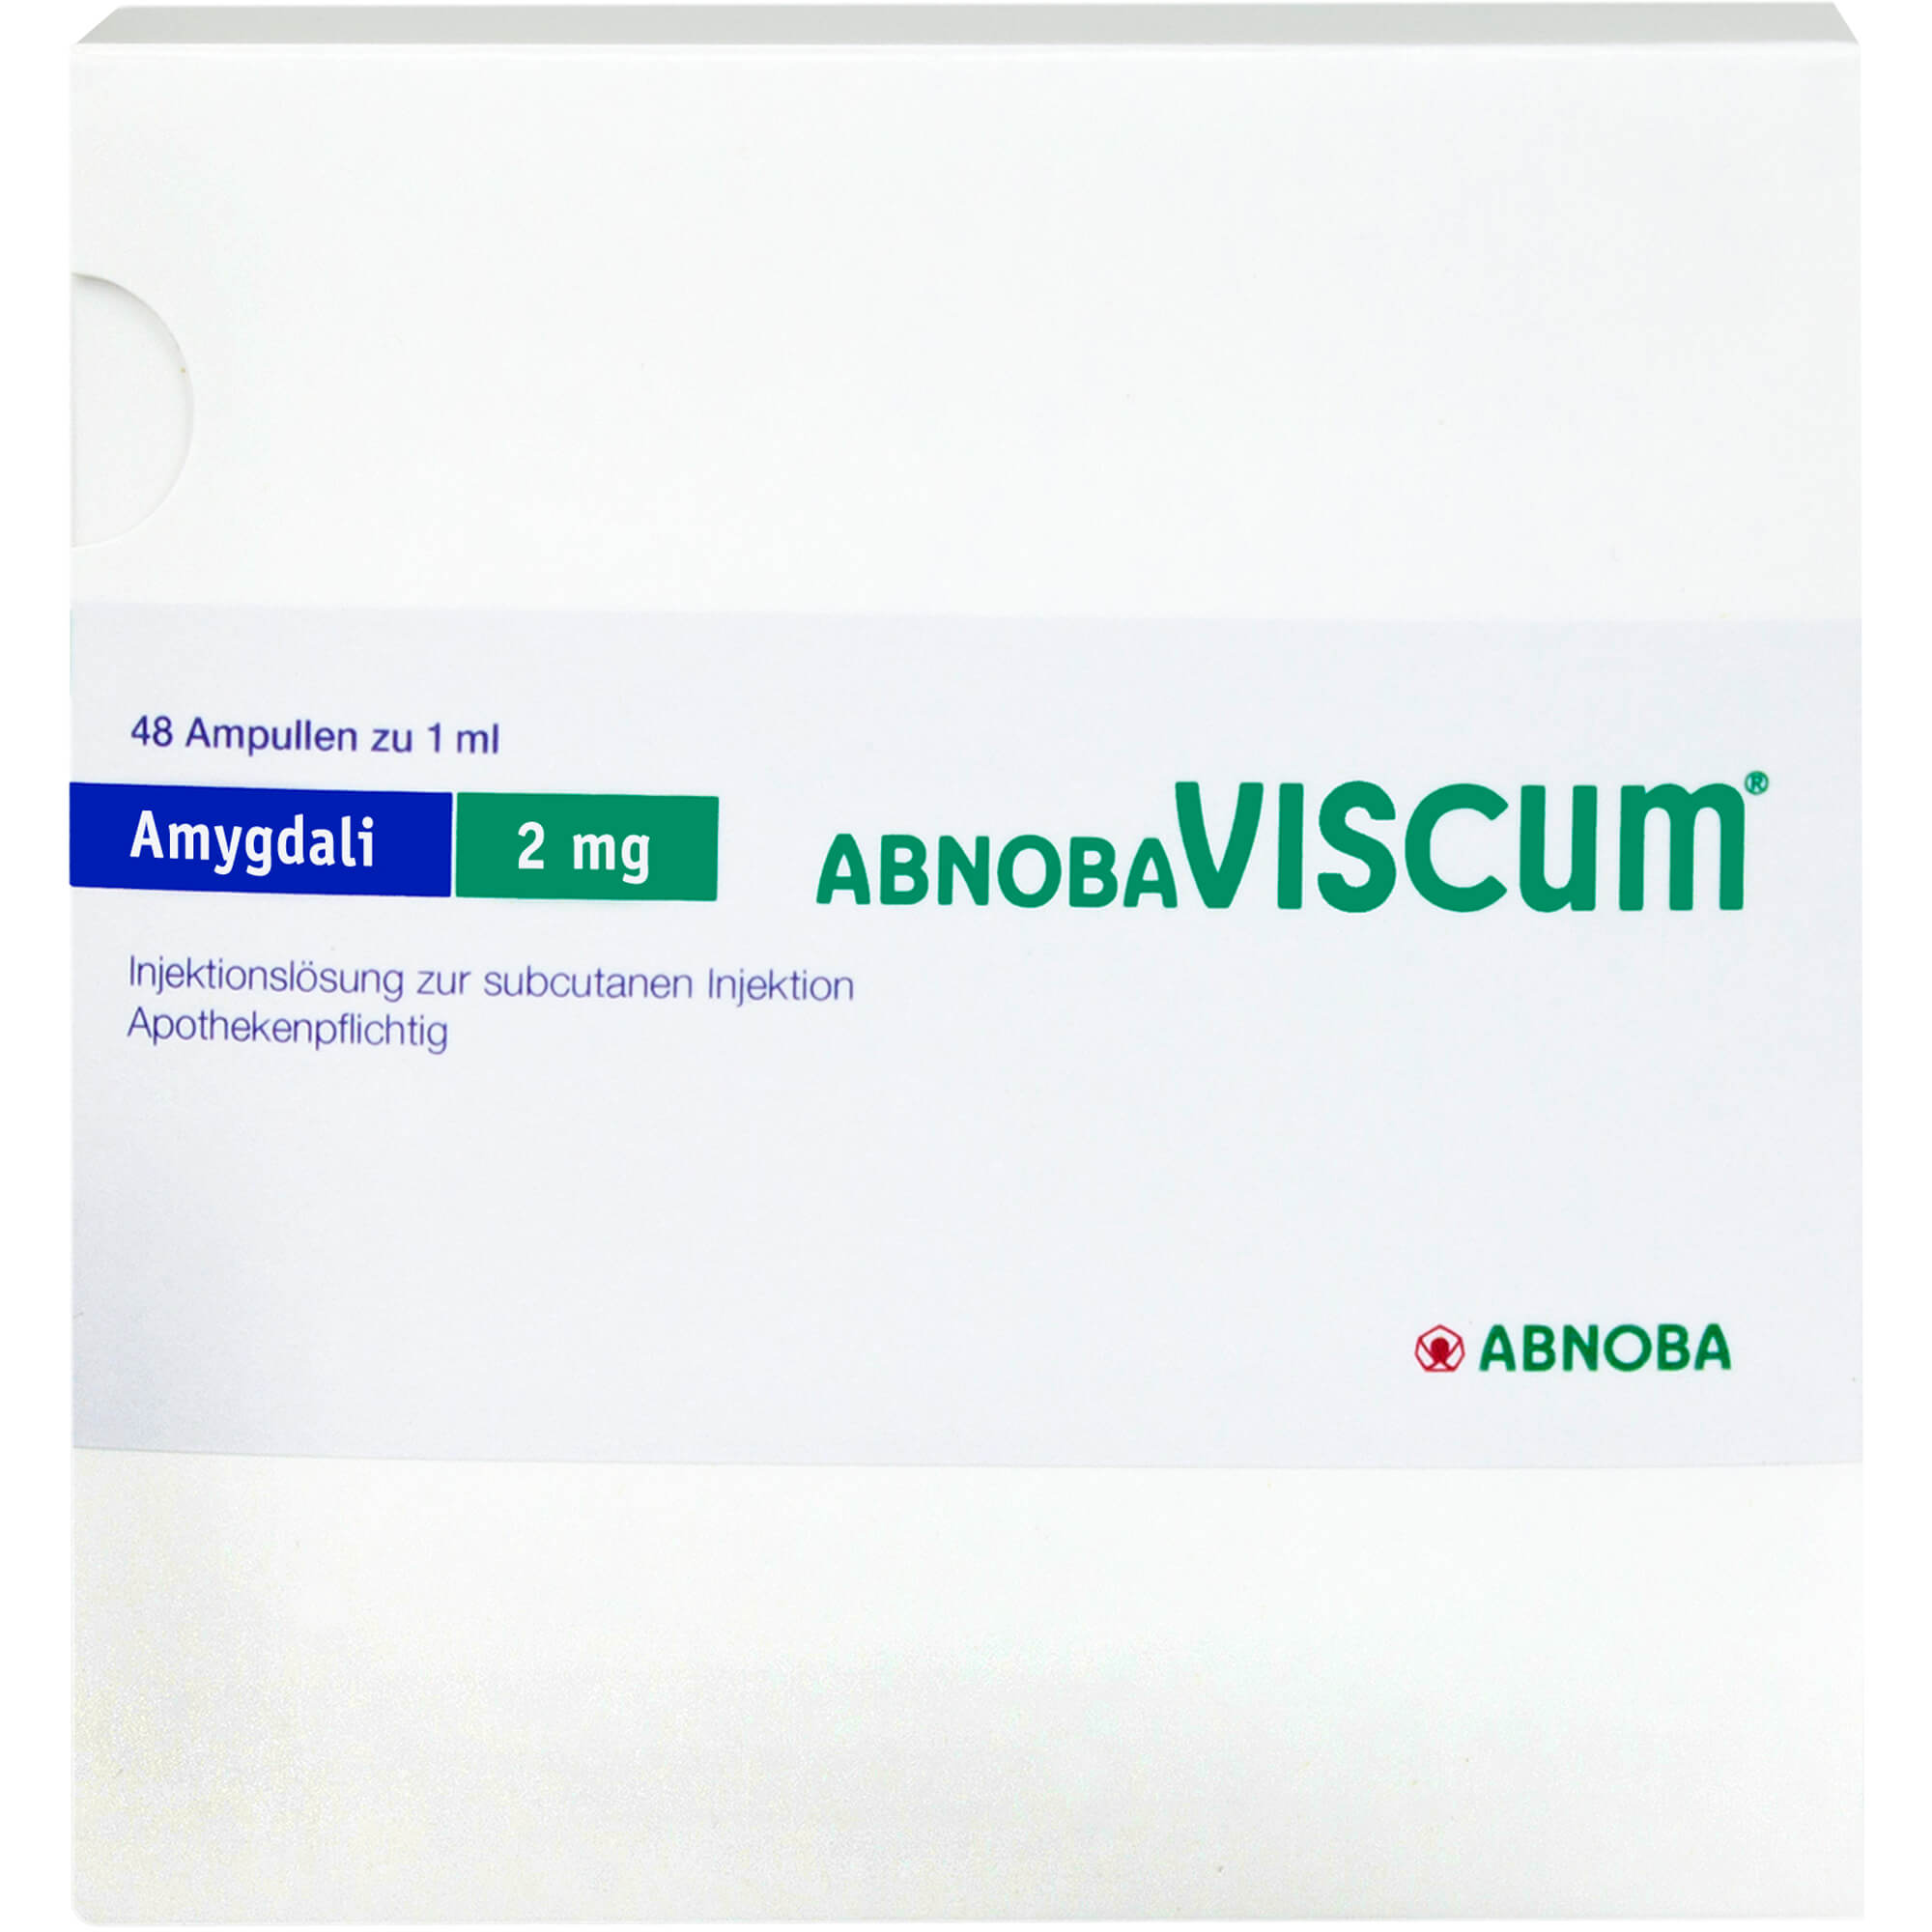 ABNOBAVISCUM Amygdali 2 mg Ampullen